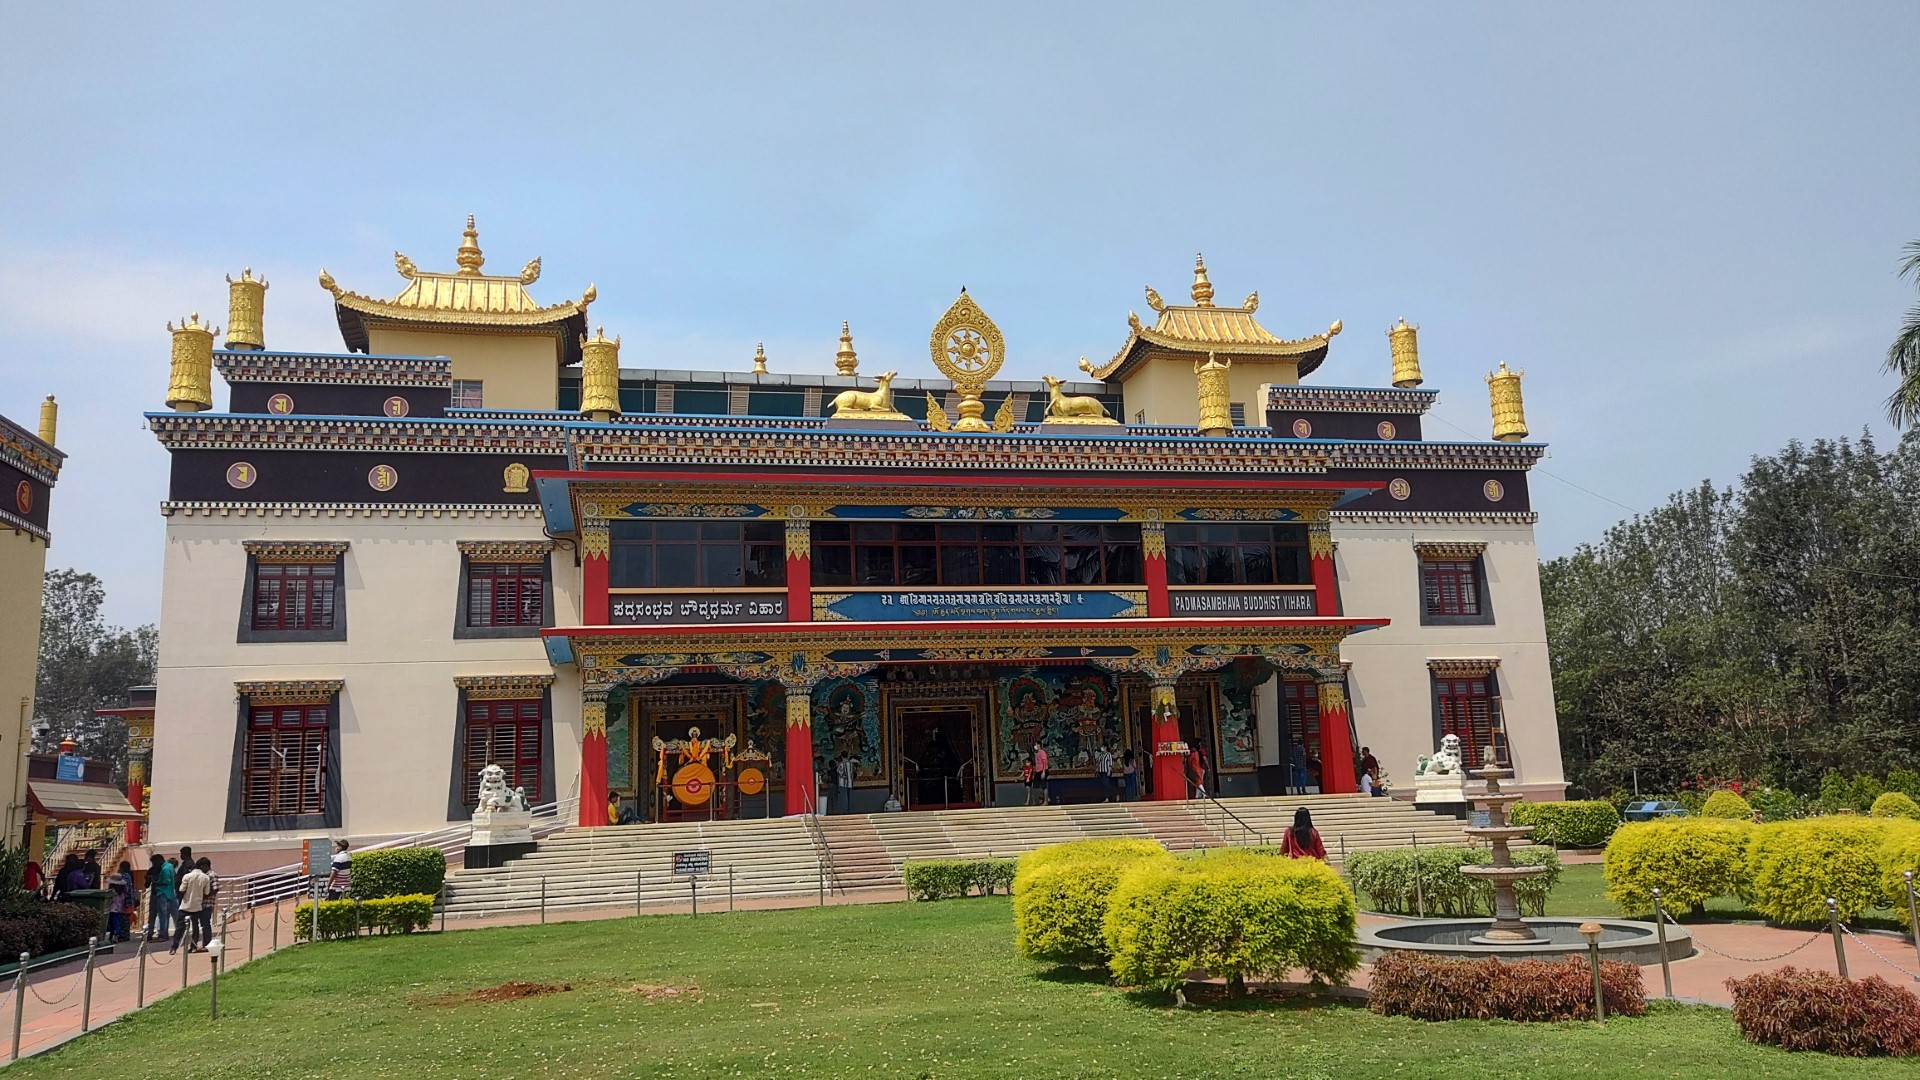 Padmasambhava Vihara inside the Golden Temple